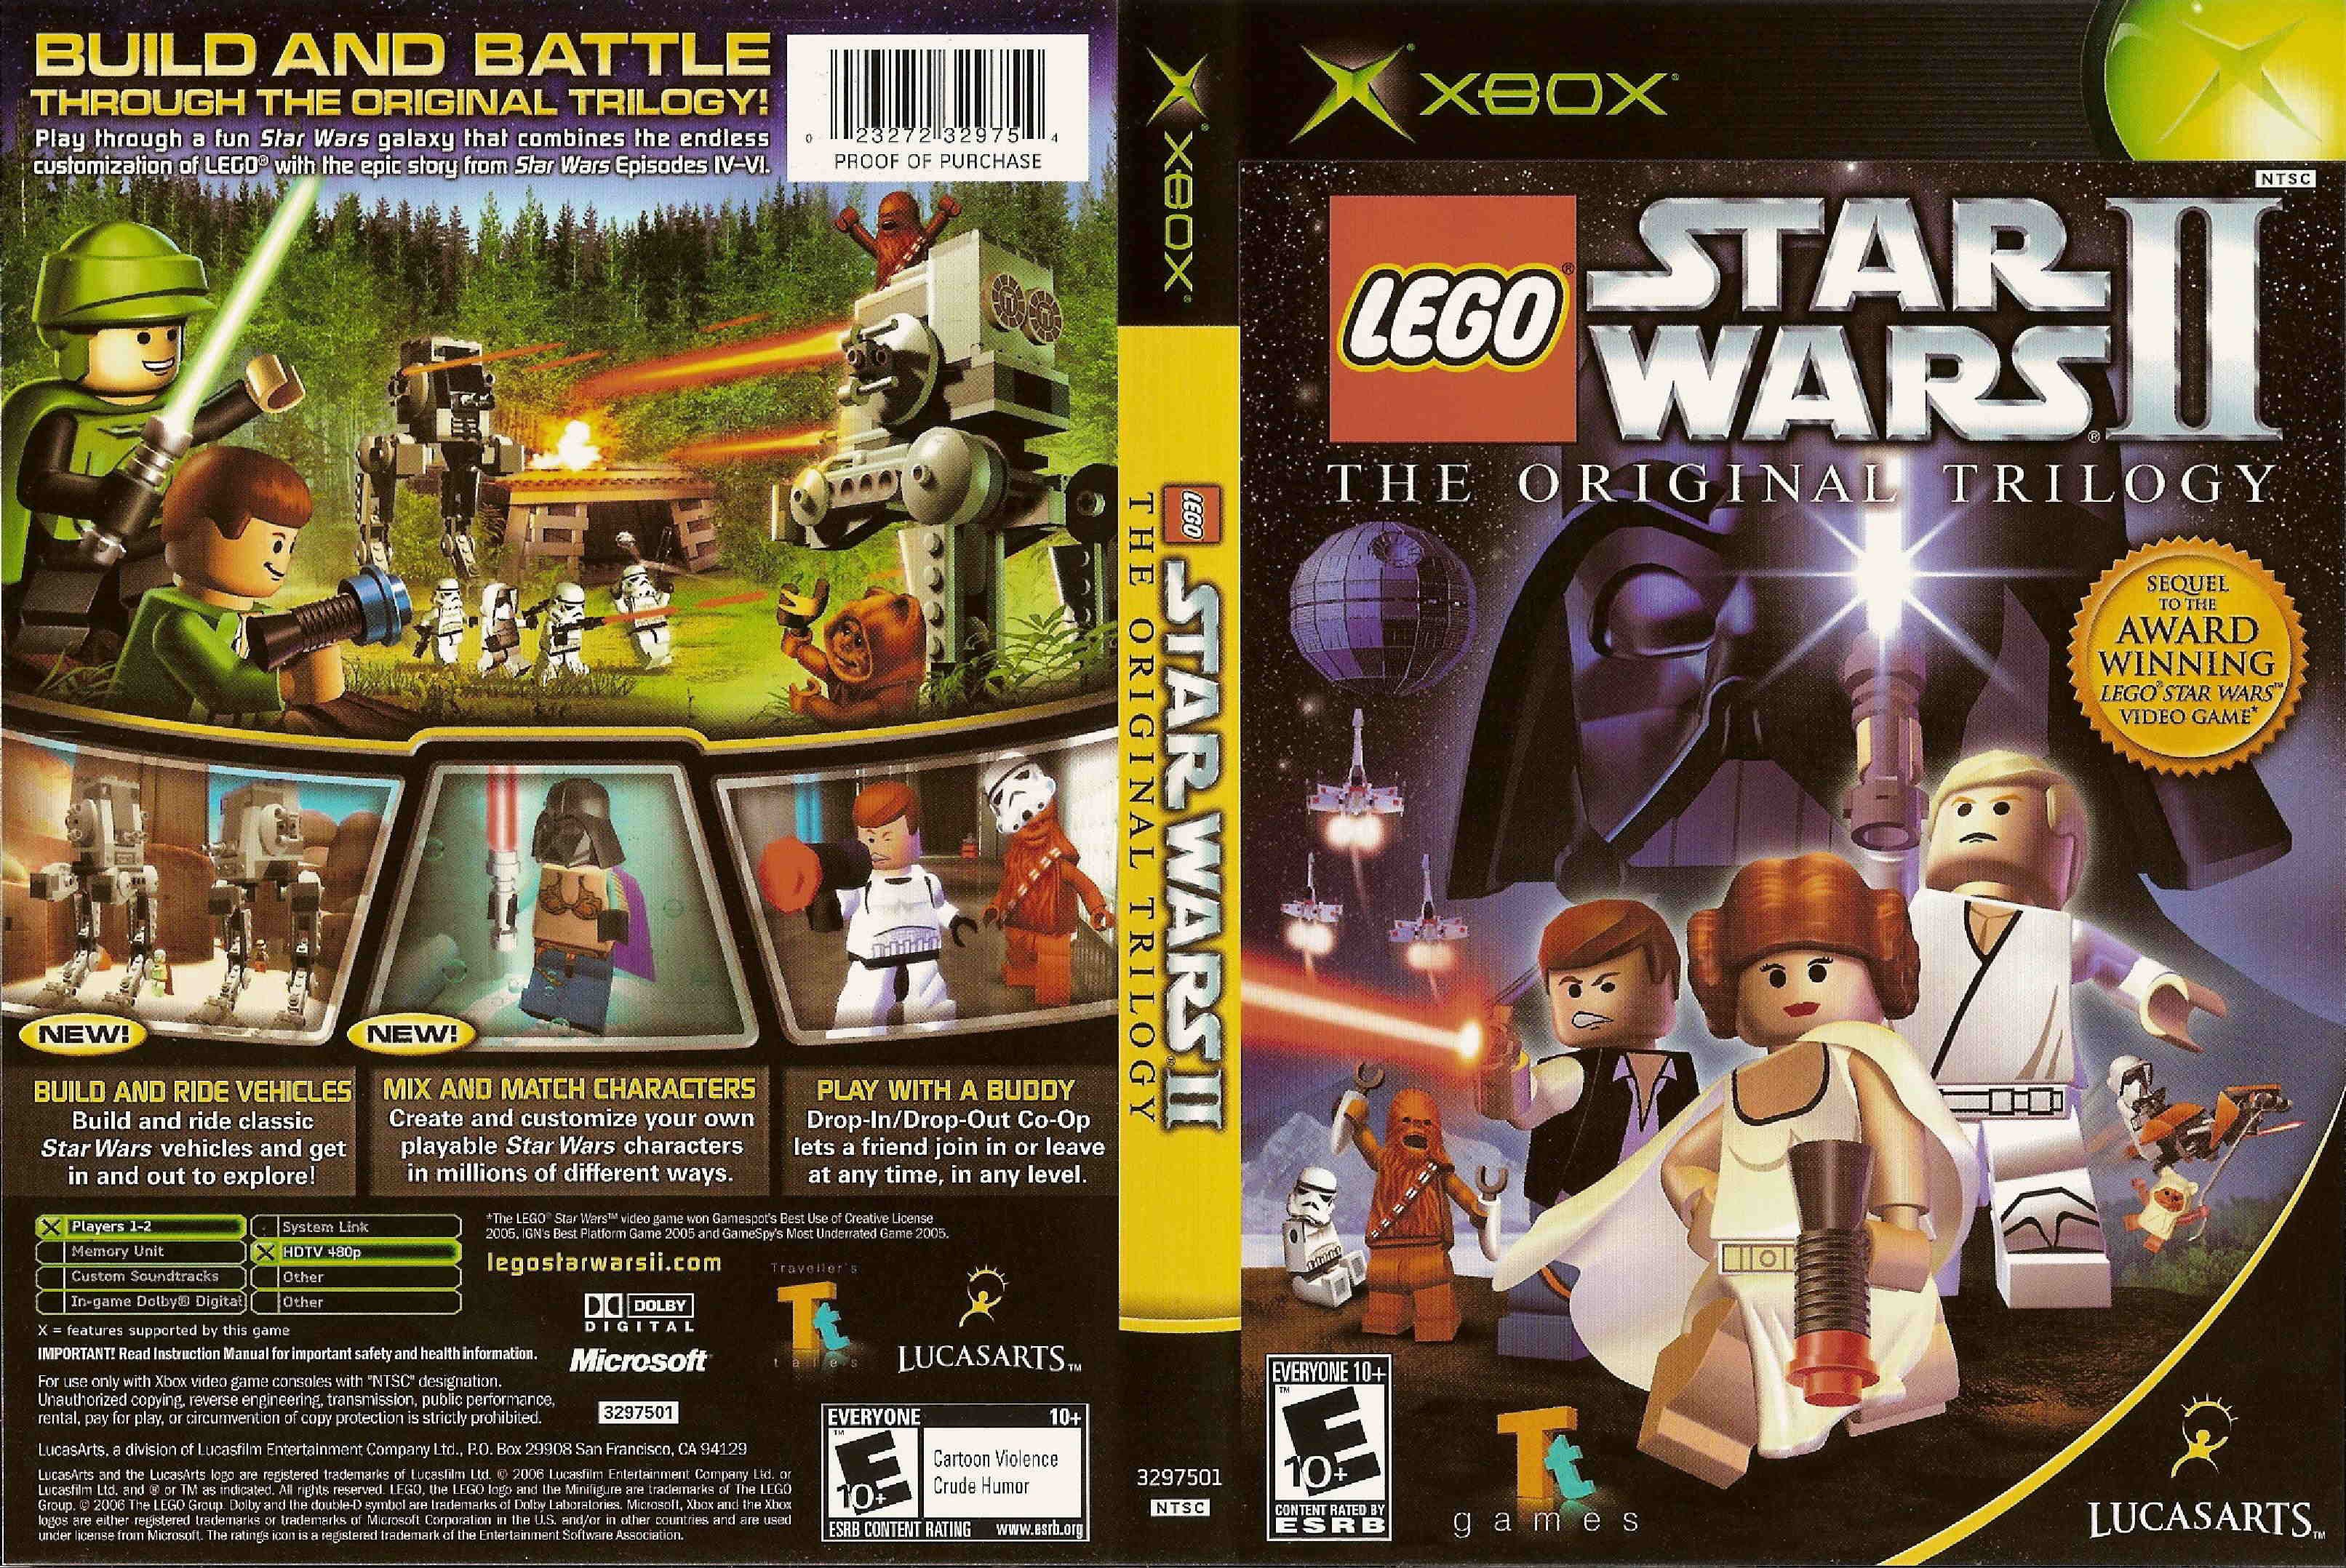 LEGO Star Wars II The Original Trilogy |